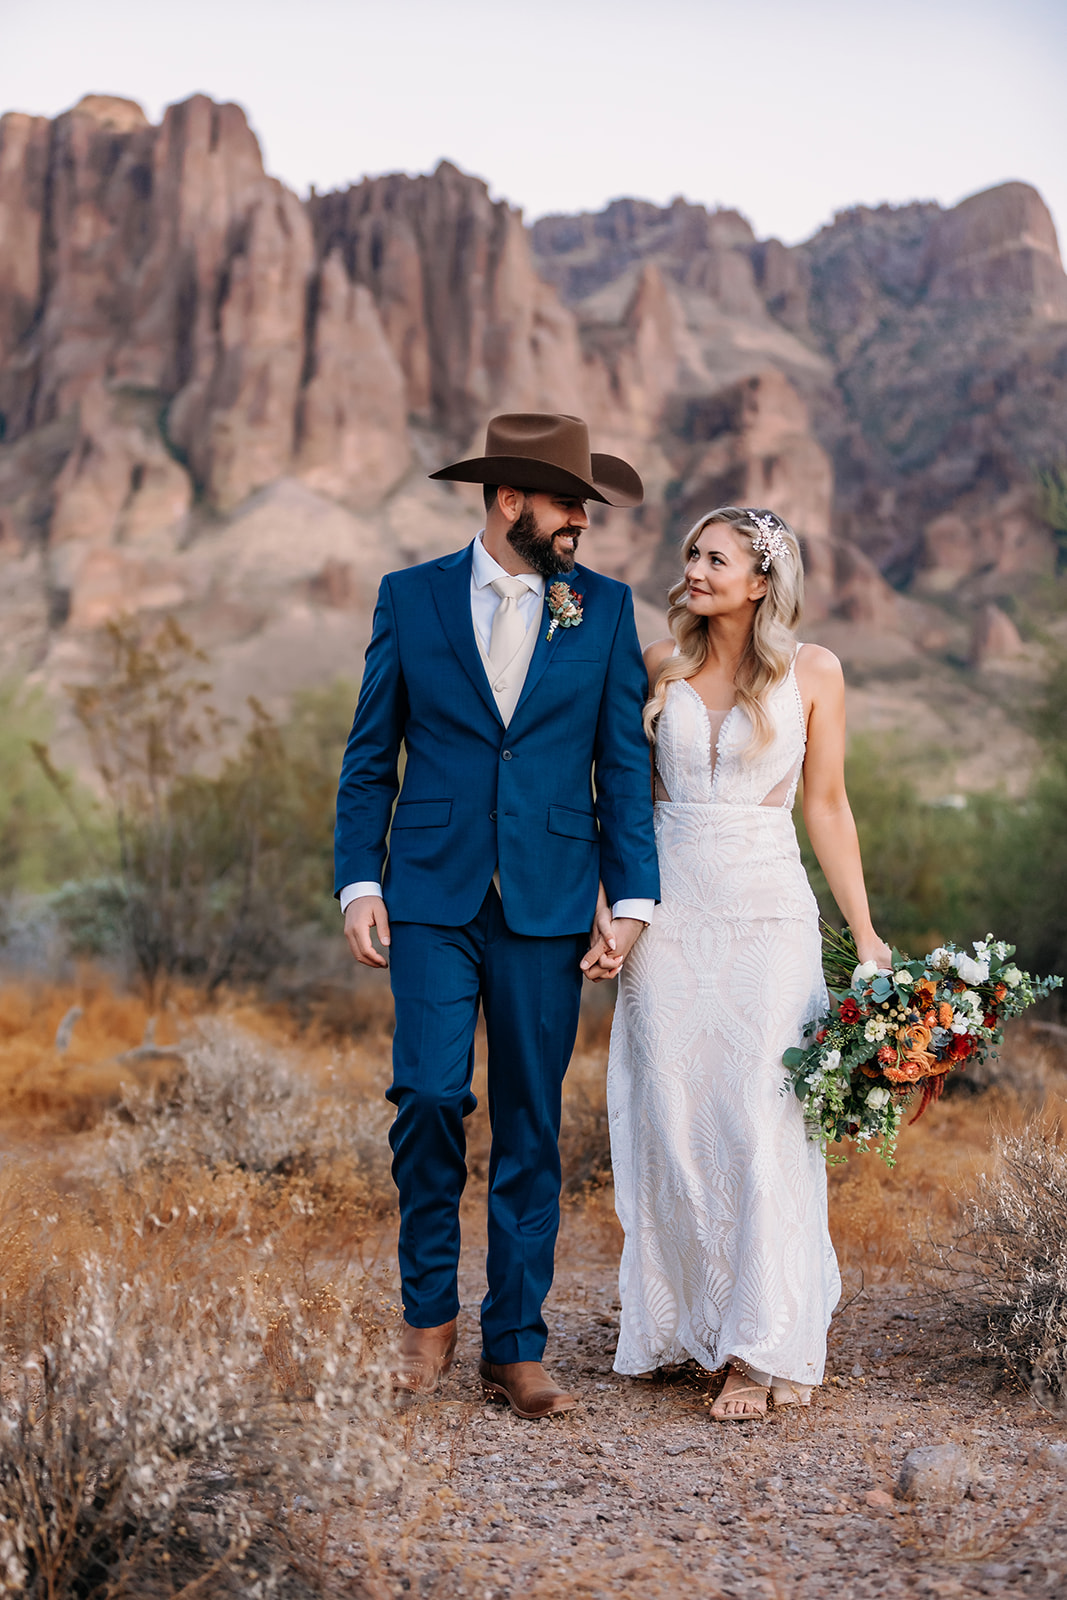 Wedding at Lost Dutchman, Arizona